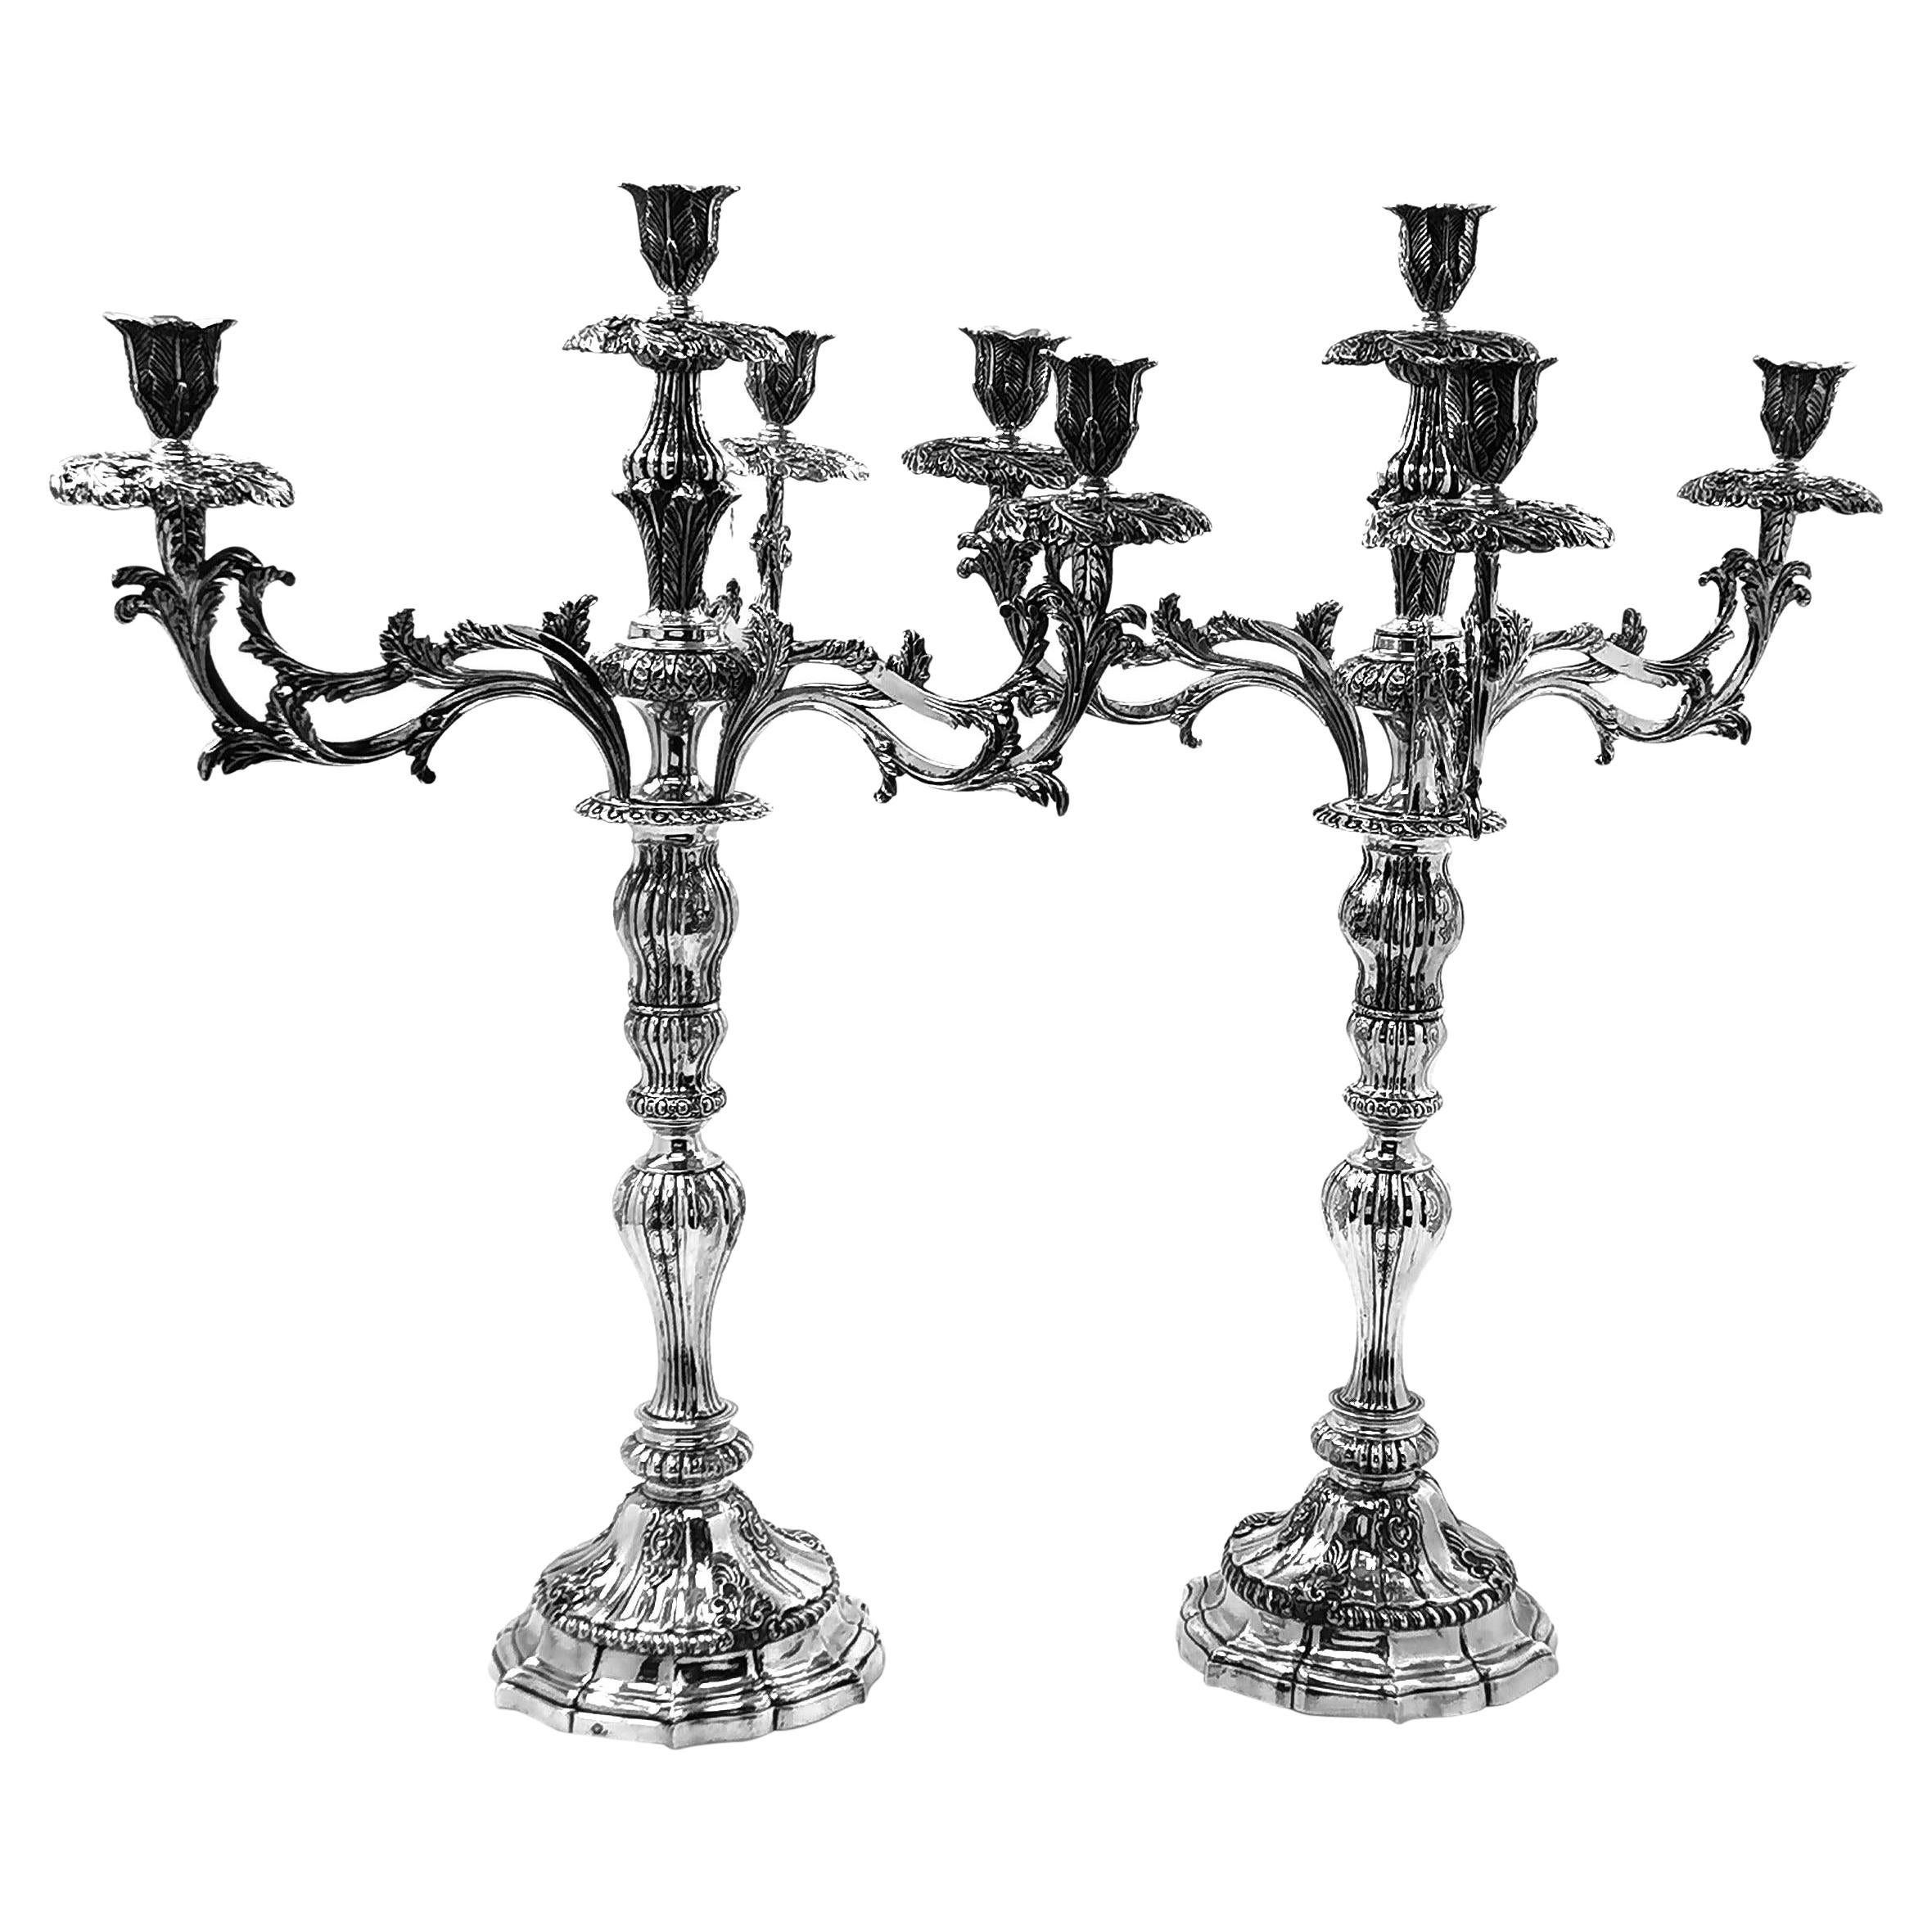 Seltenes Paar antiker portugiesischer Silberkandelaber, um 1800, 19. Jahrhundert, Kerzenhalter